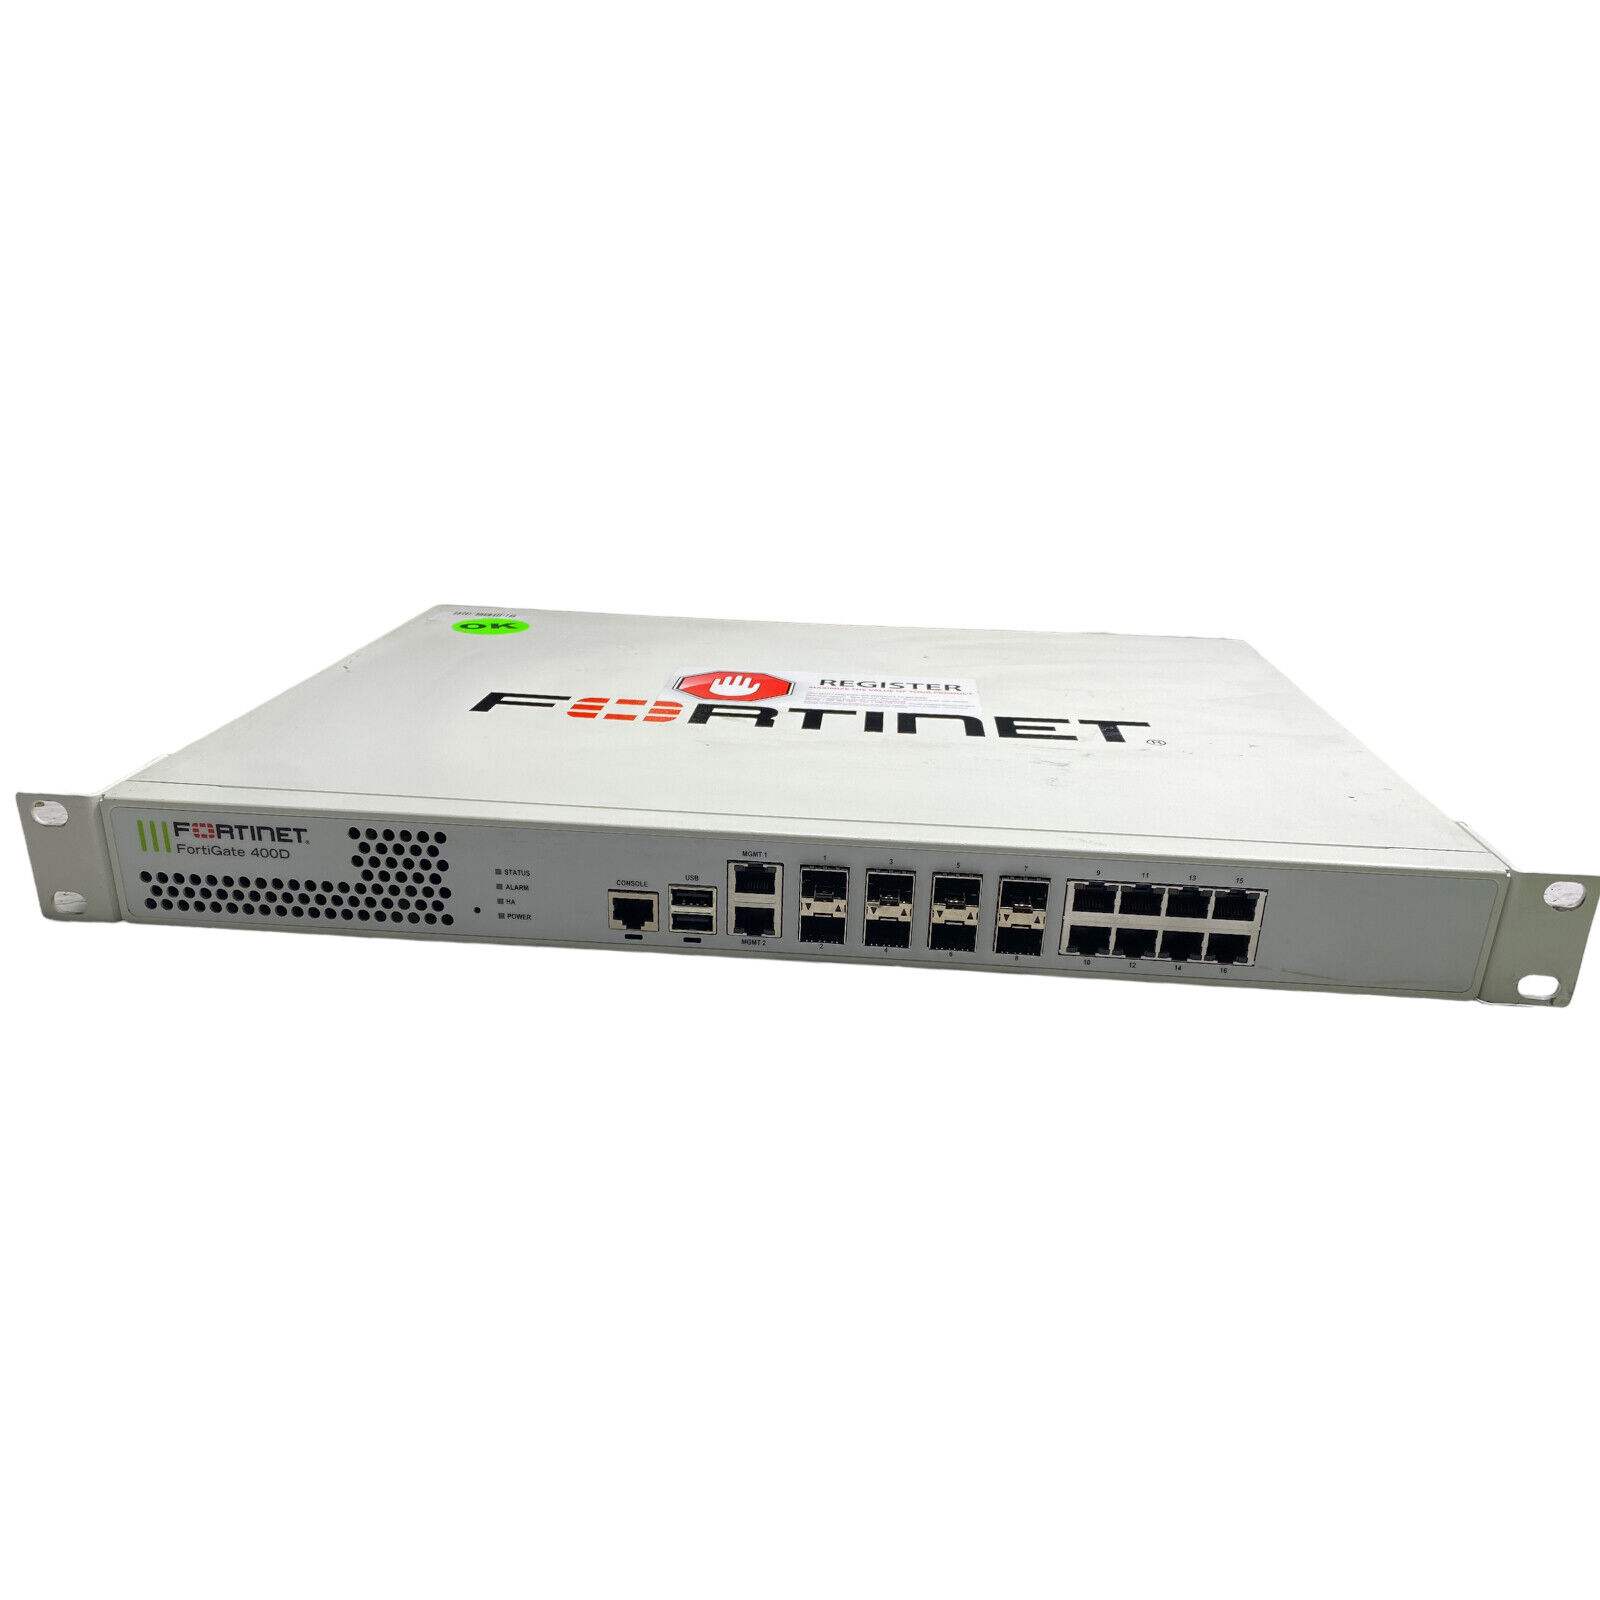 Fortinet FortiGate | FG-400D | Network Firewall Appliance